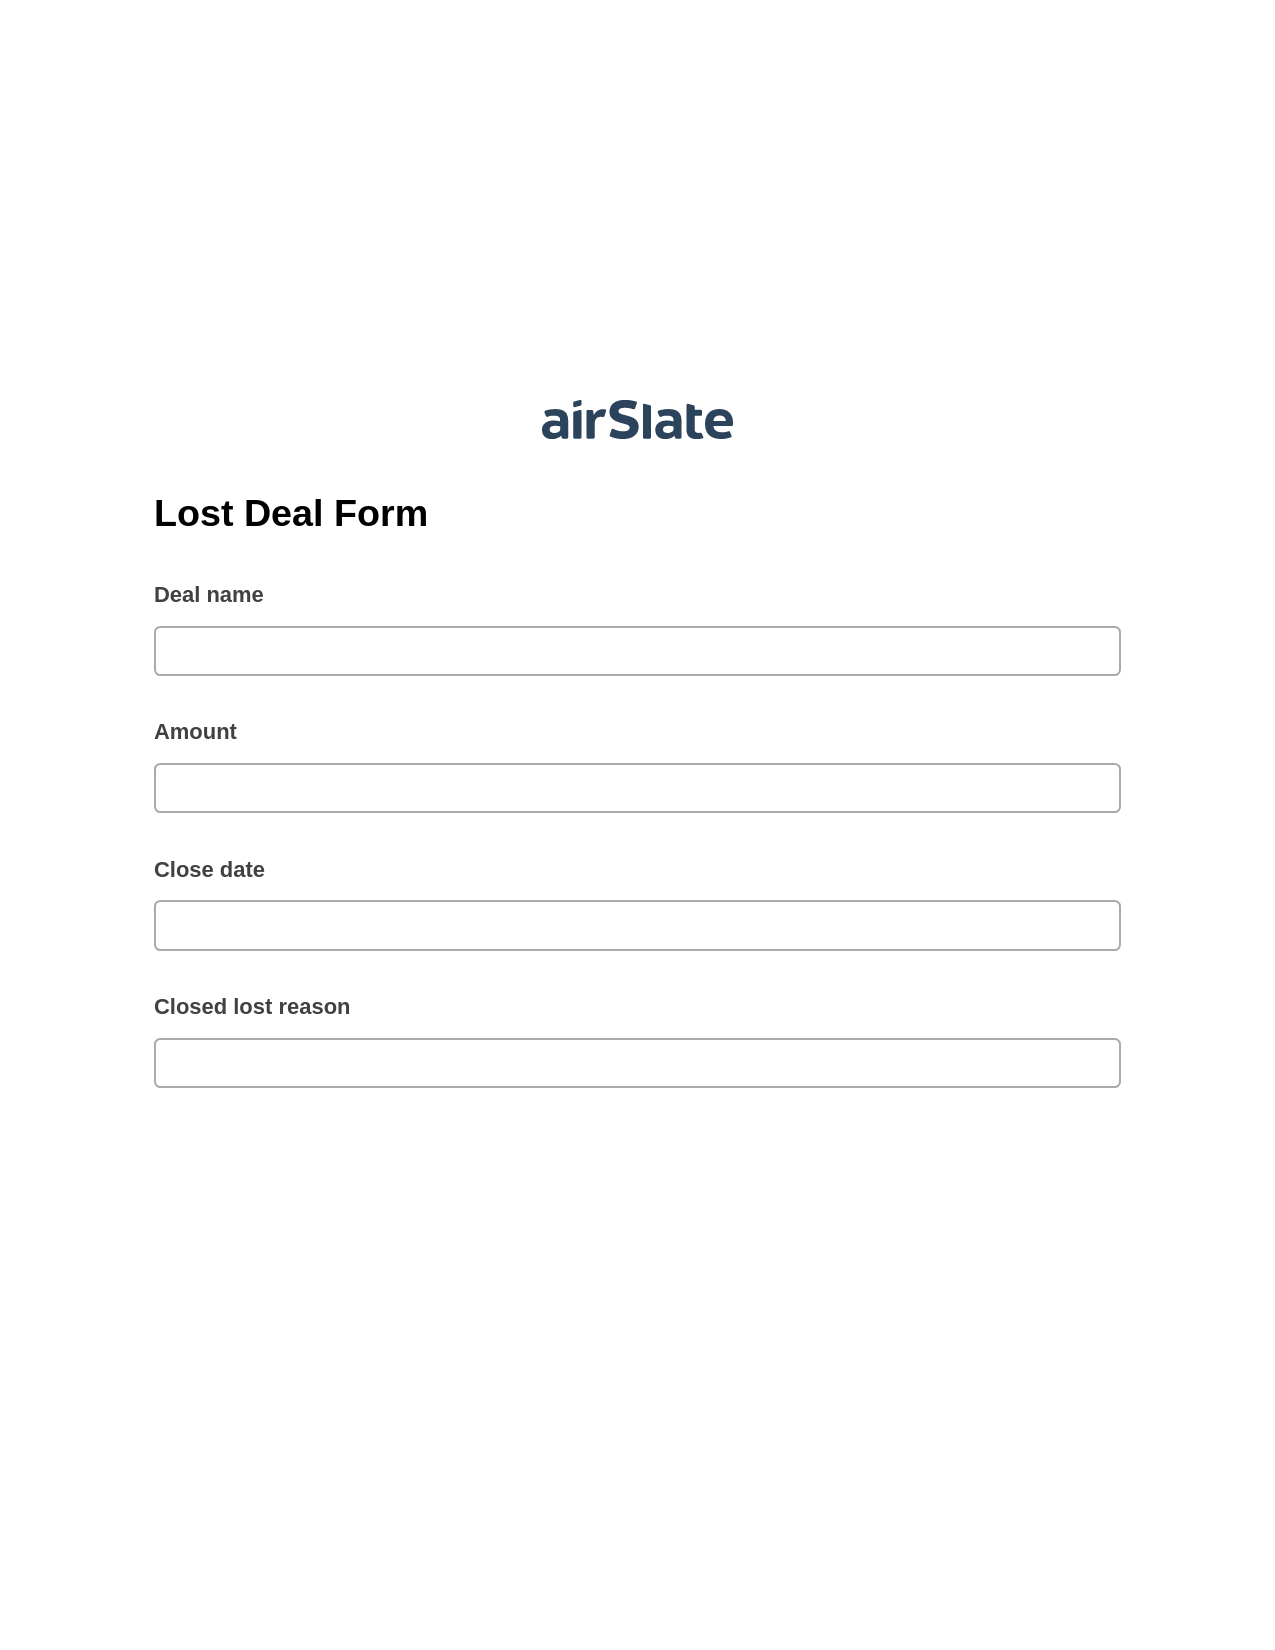 Lost Deal Form Pre-fill from Excel Spreadsheet Bot, Invoke Salesforce Process Bot, Export to Smartsheet